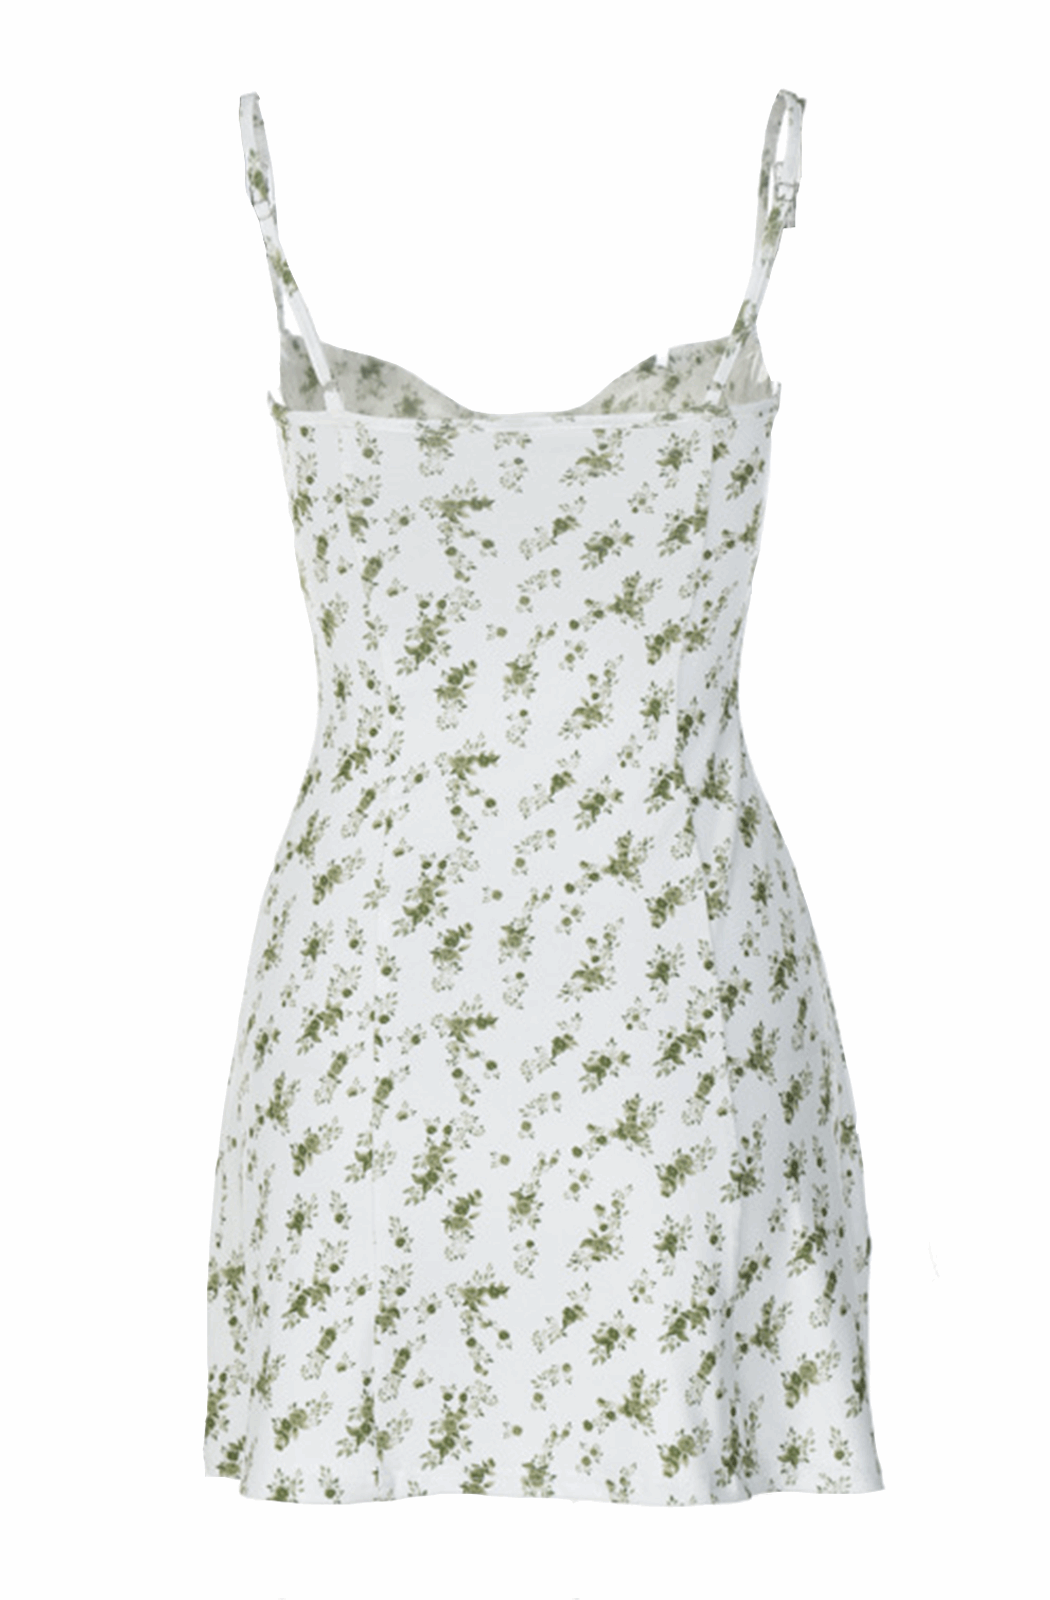 Short white floral dress